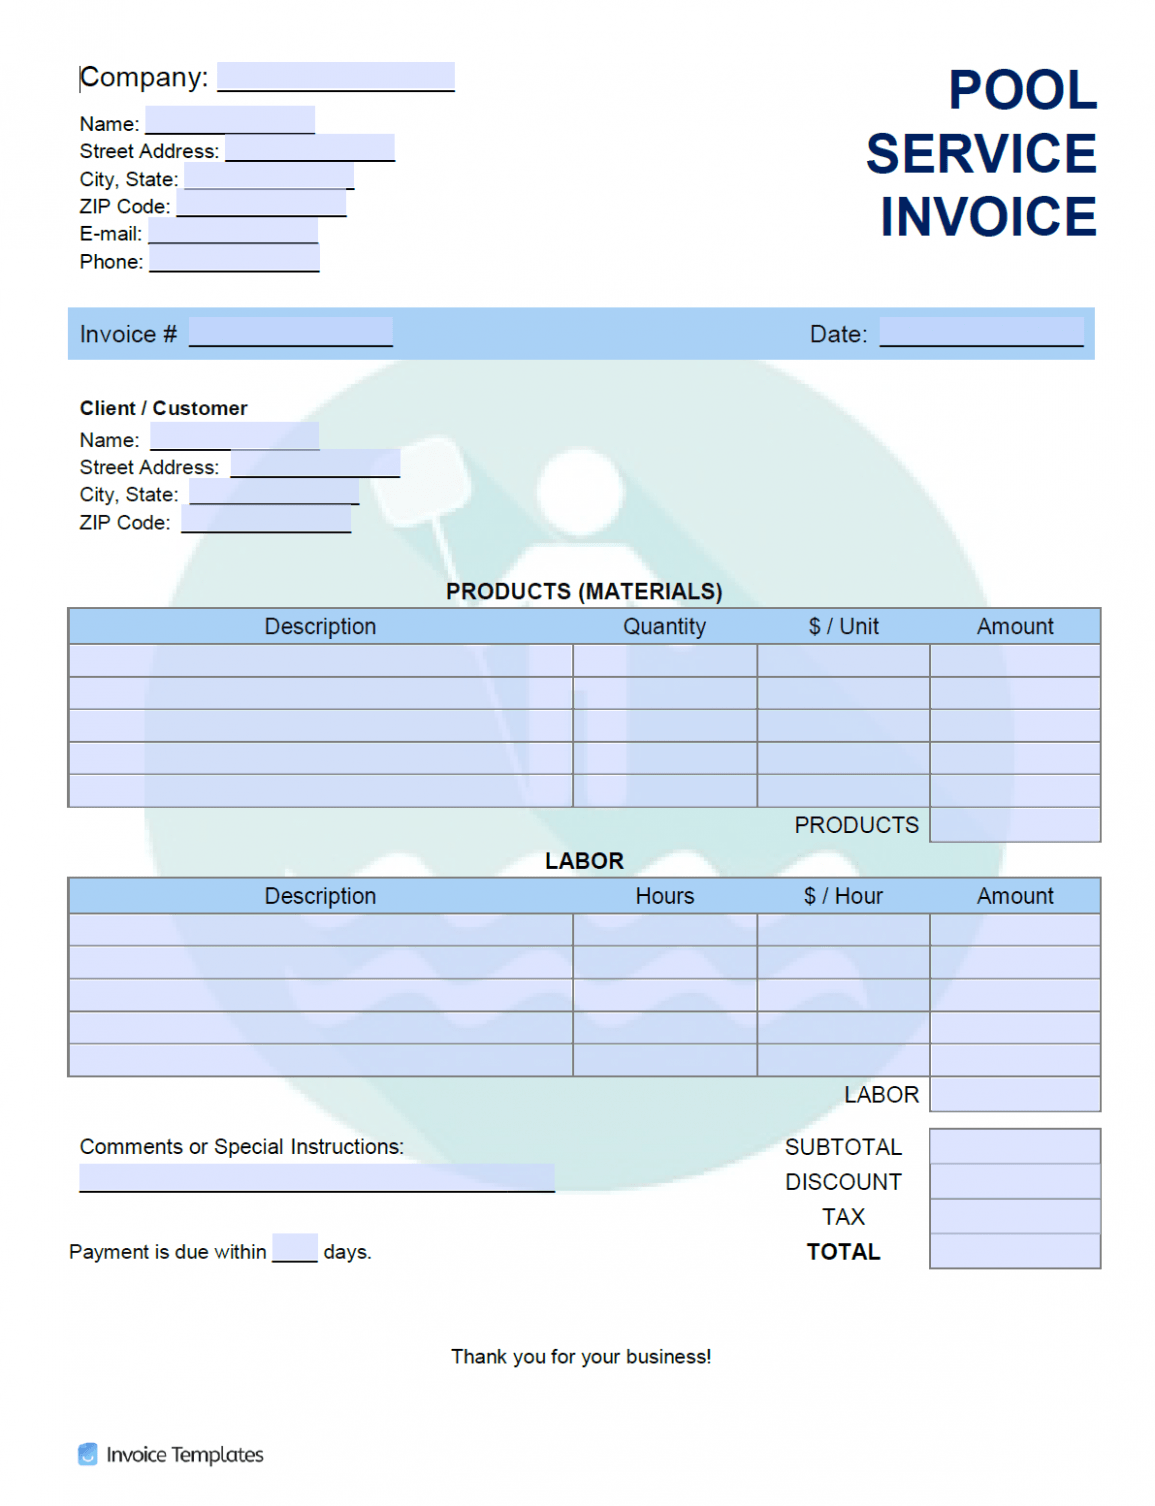 Editable Pool Service Invoice Template Doc